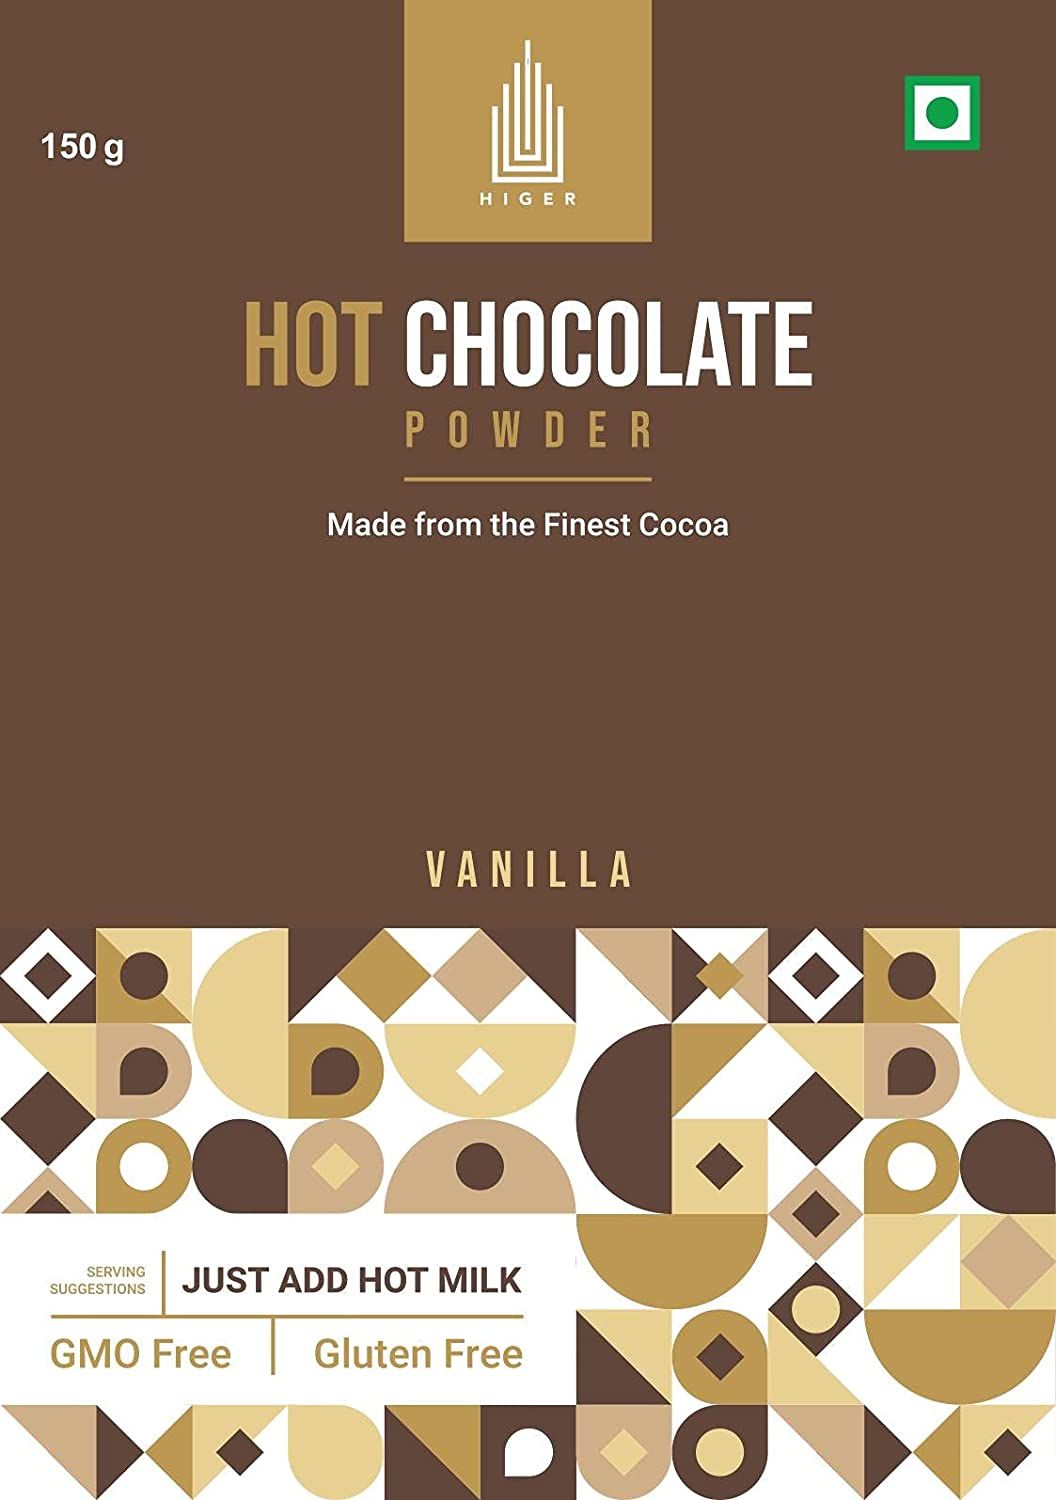 Higer Hot Chocolate Vanilla Powder Image